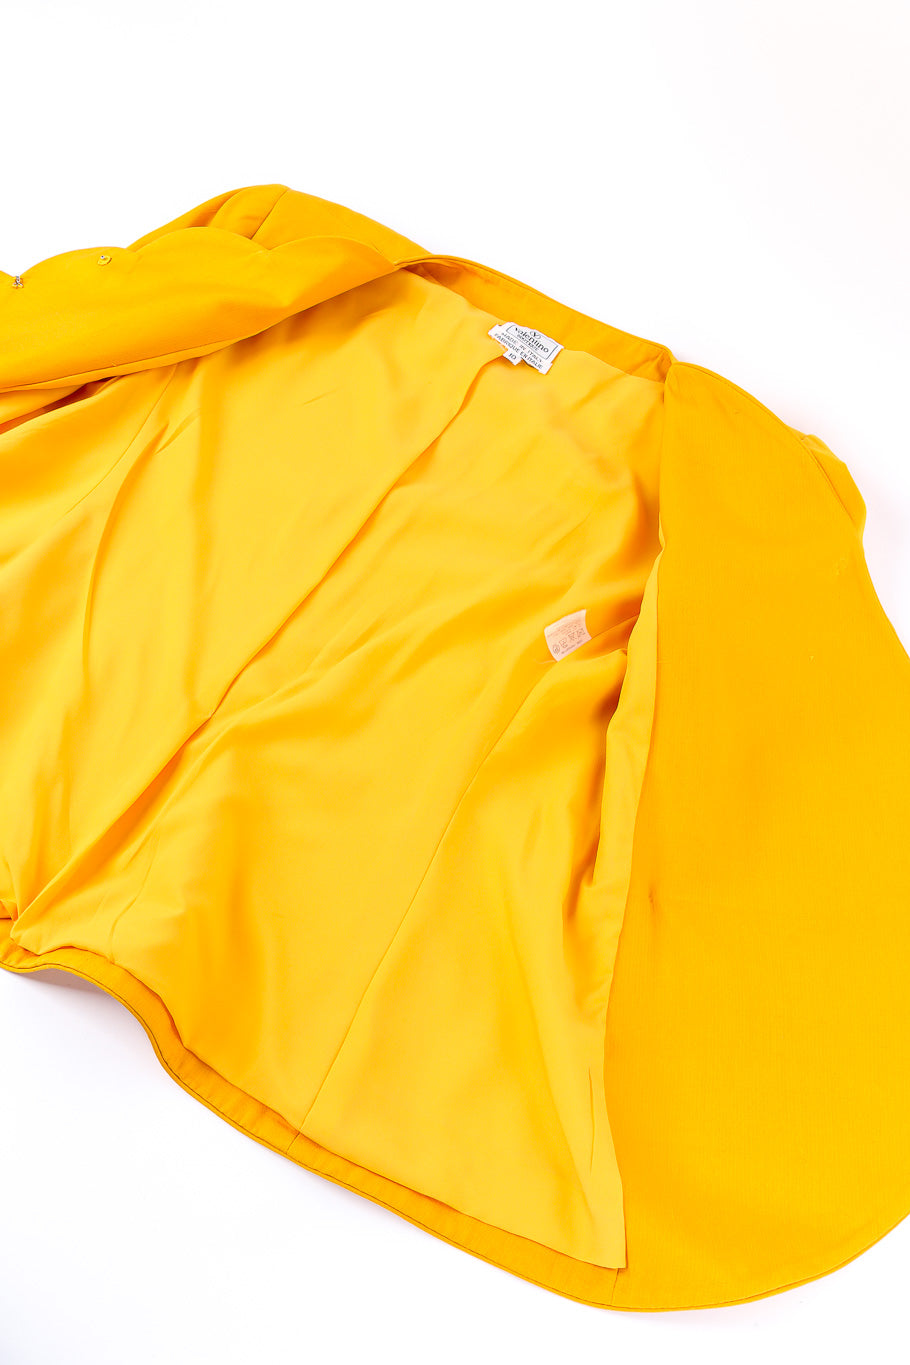 Valentino Boutique shell pattern jacket and skirt set lining details on jacket @recessla